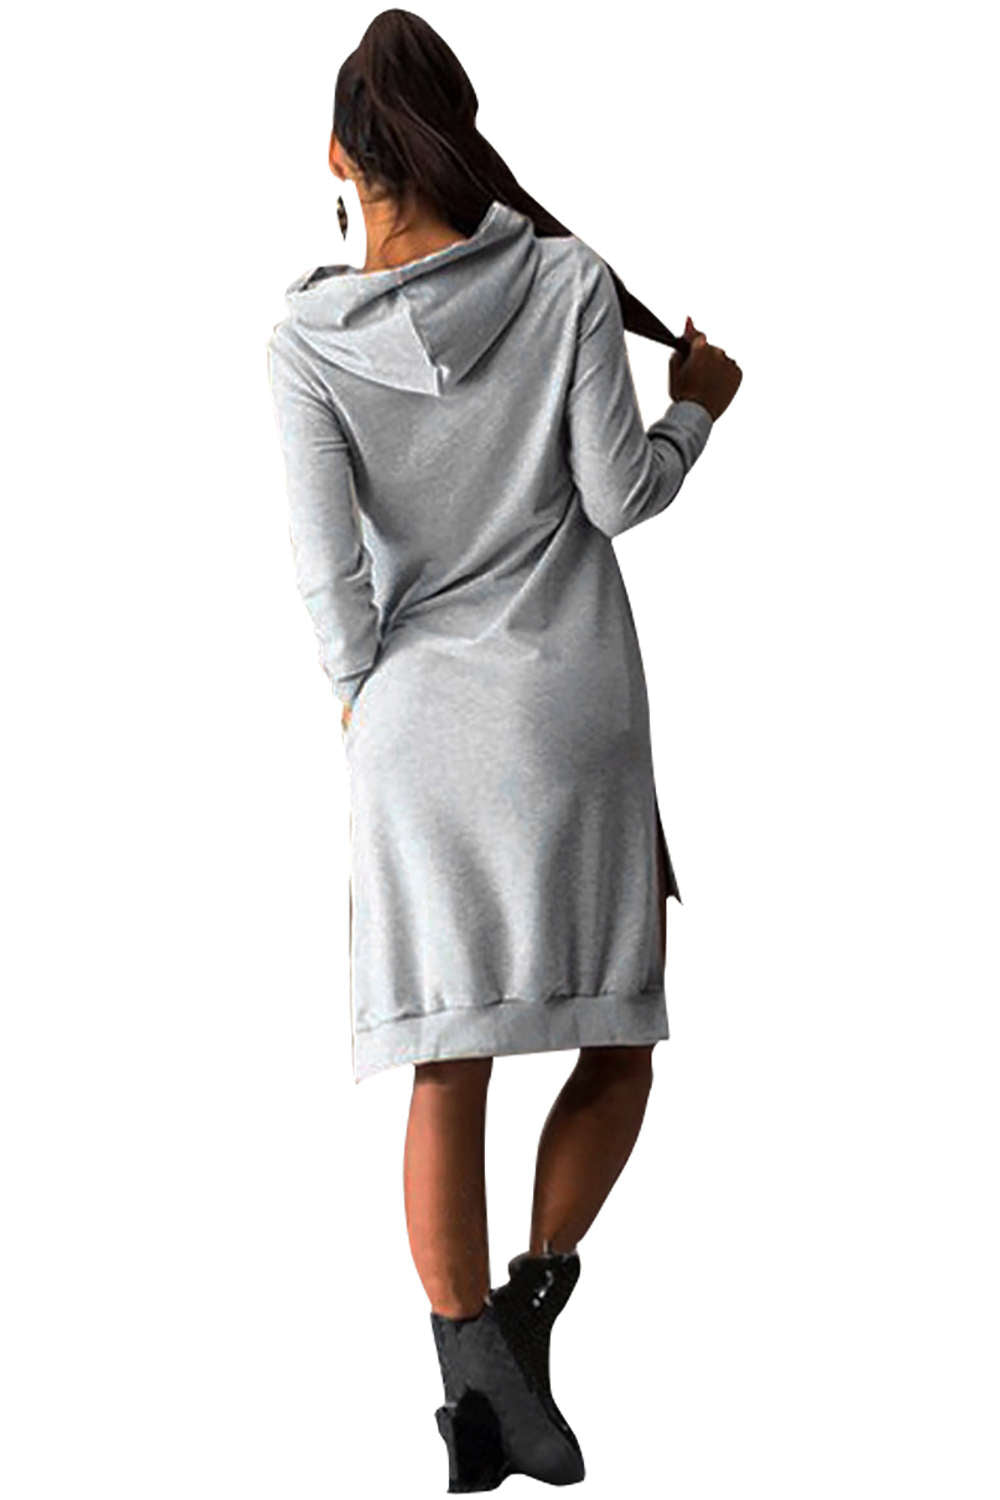 Iyasson 2018 Women's Long Sleeve Pullover Hoodie Dress